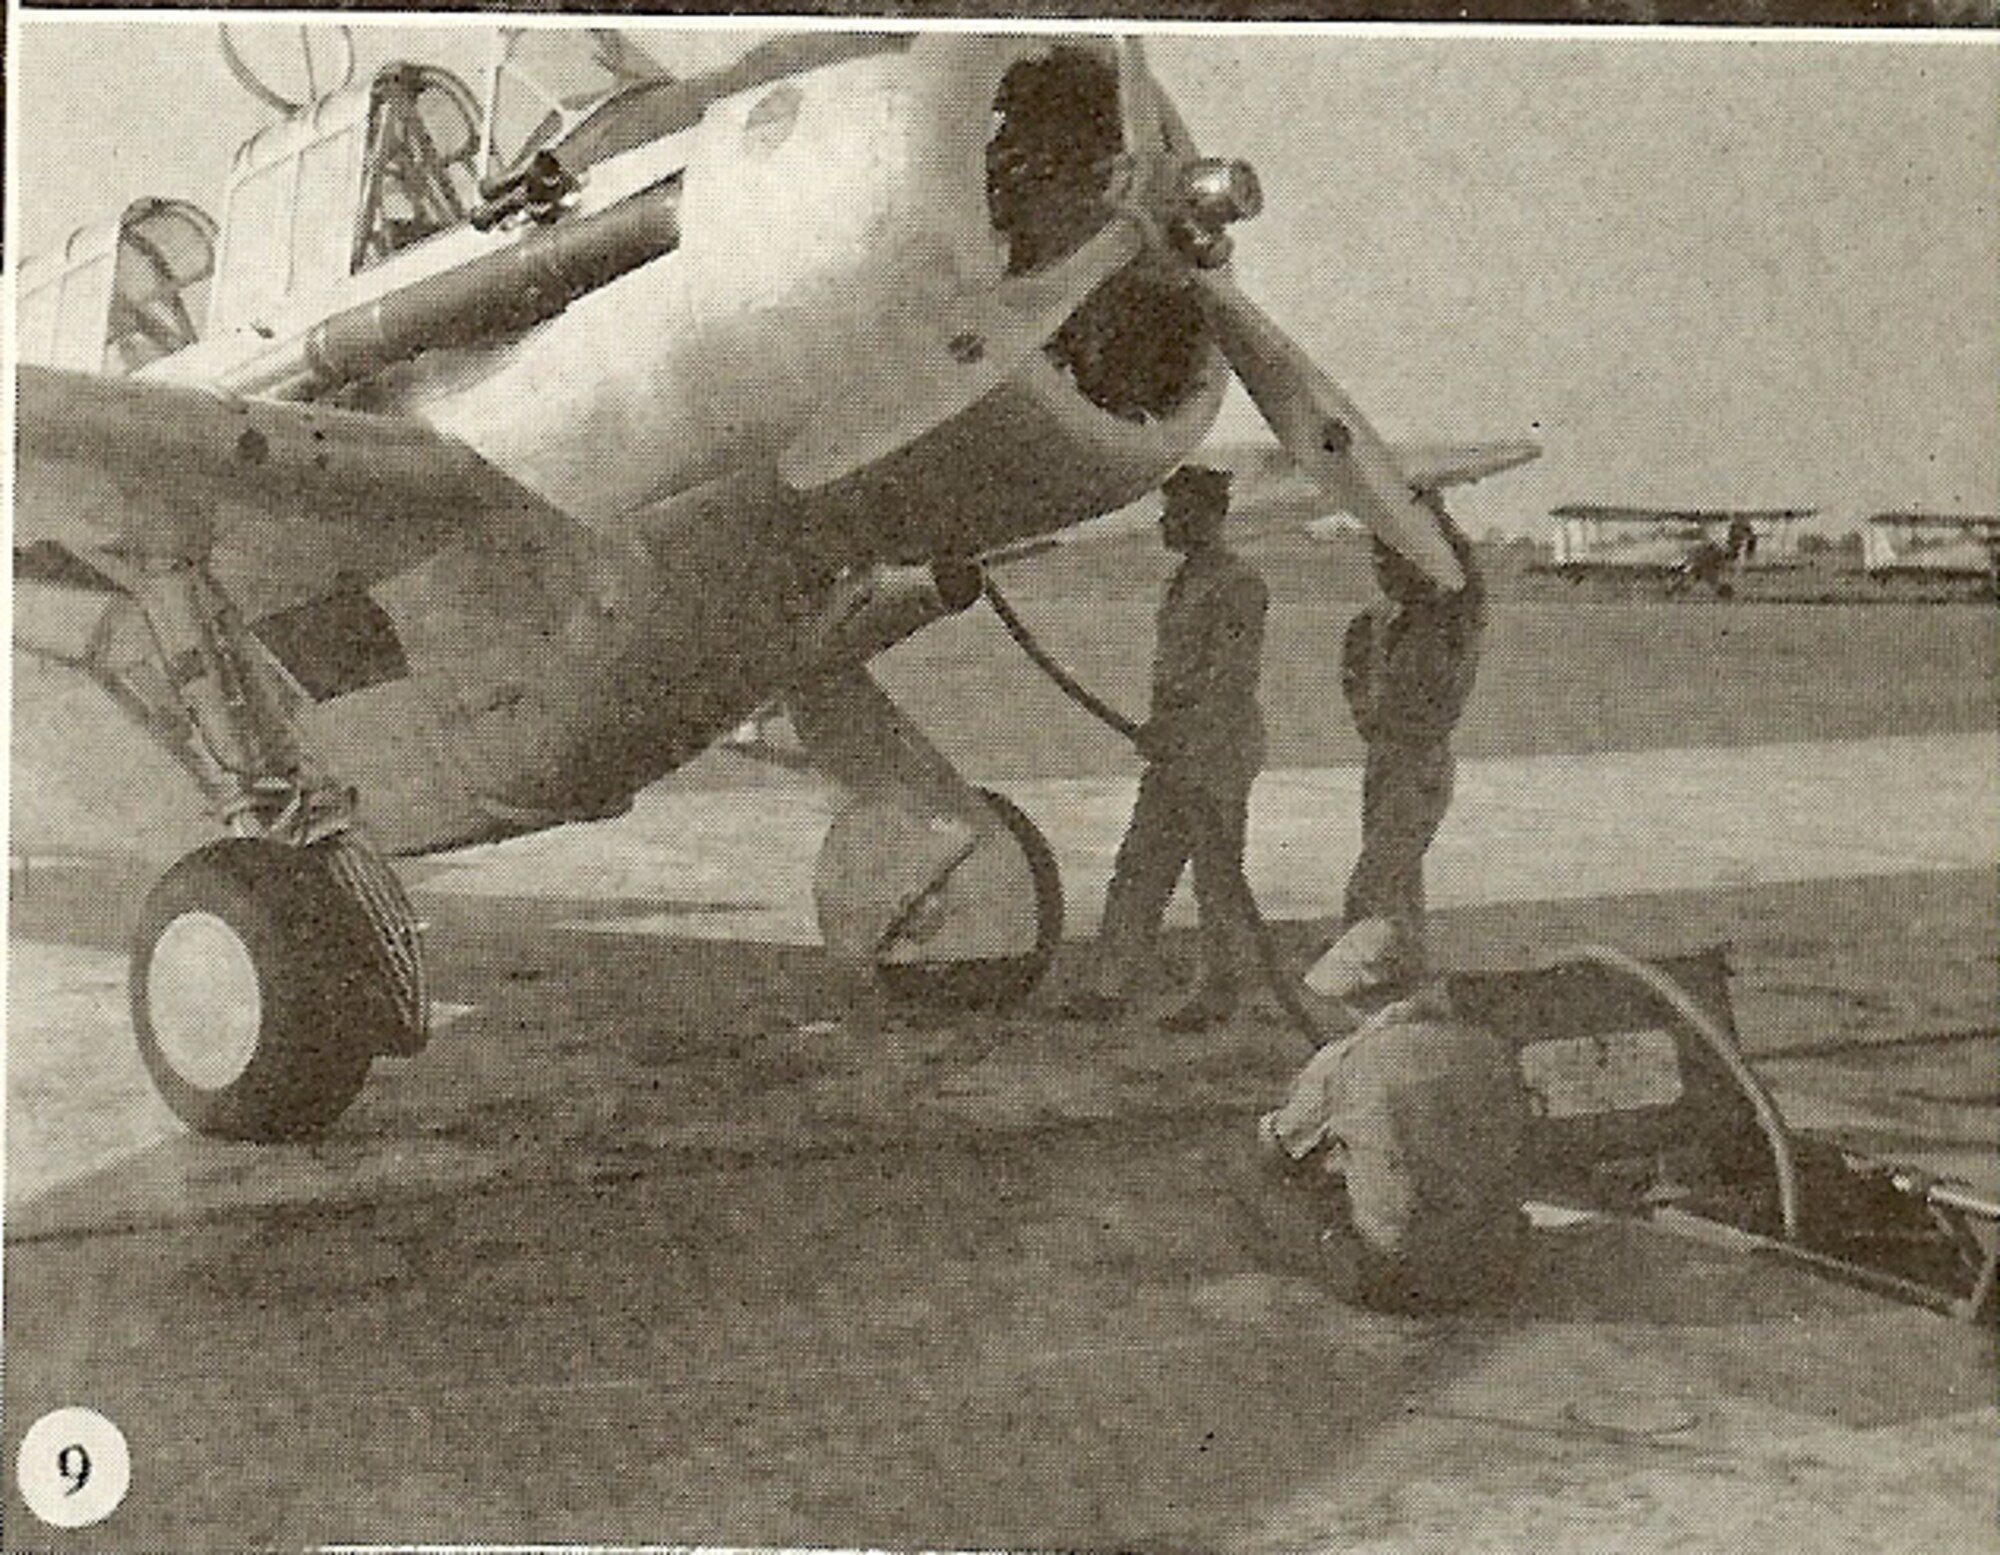 Preparing the Plane